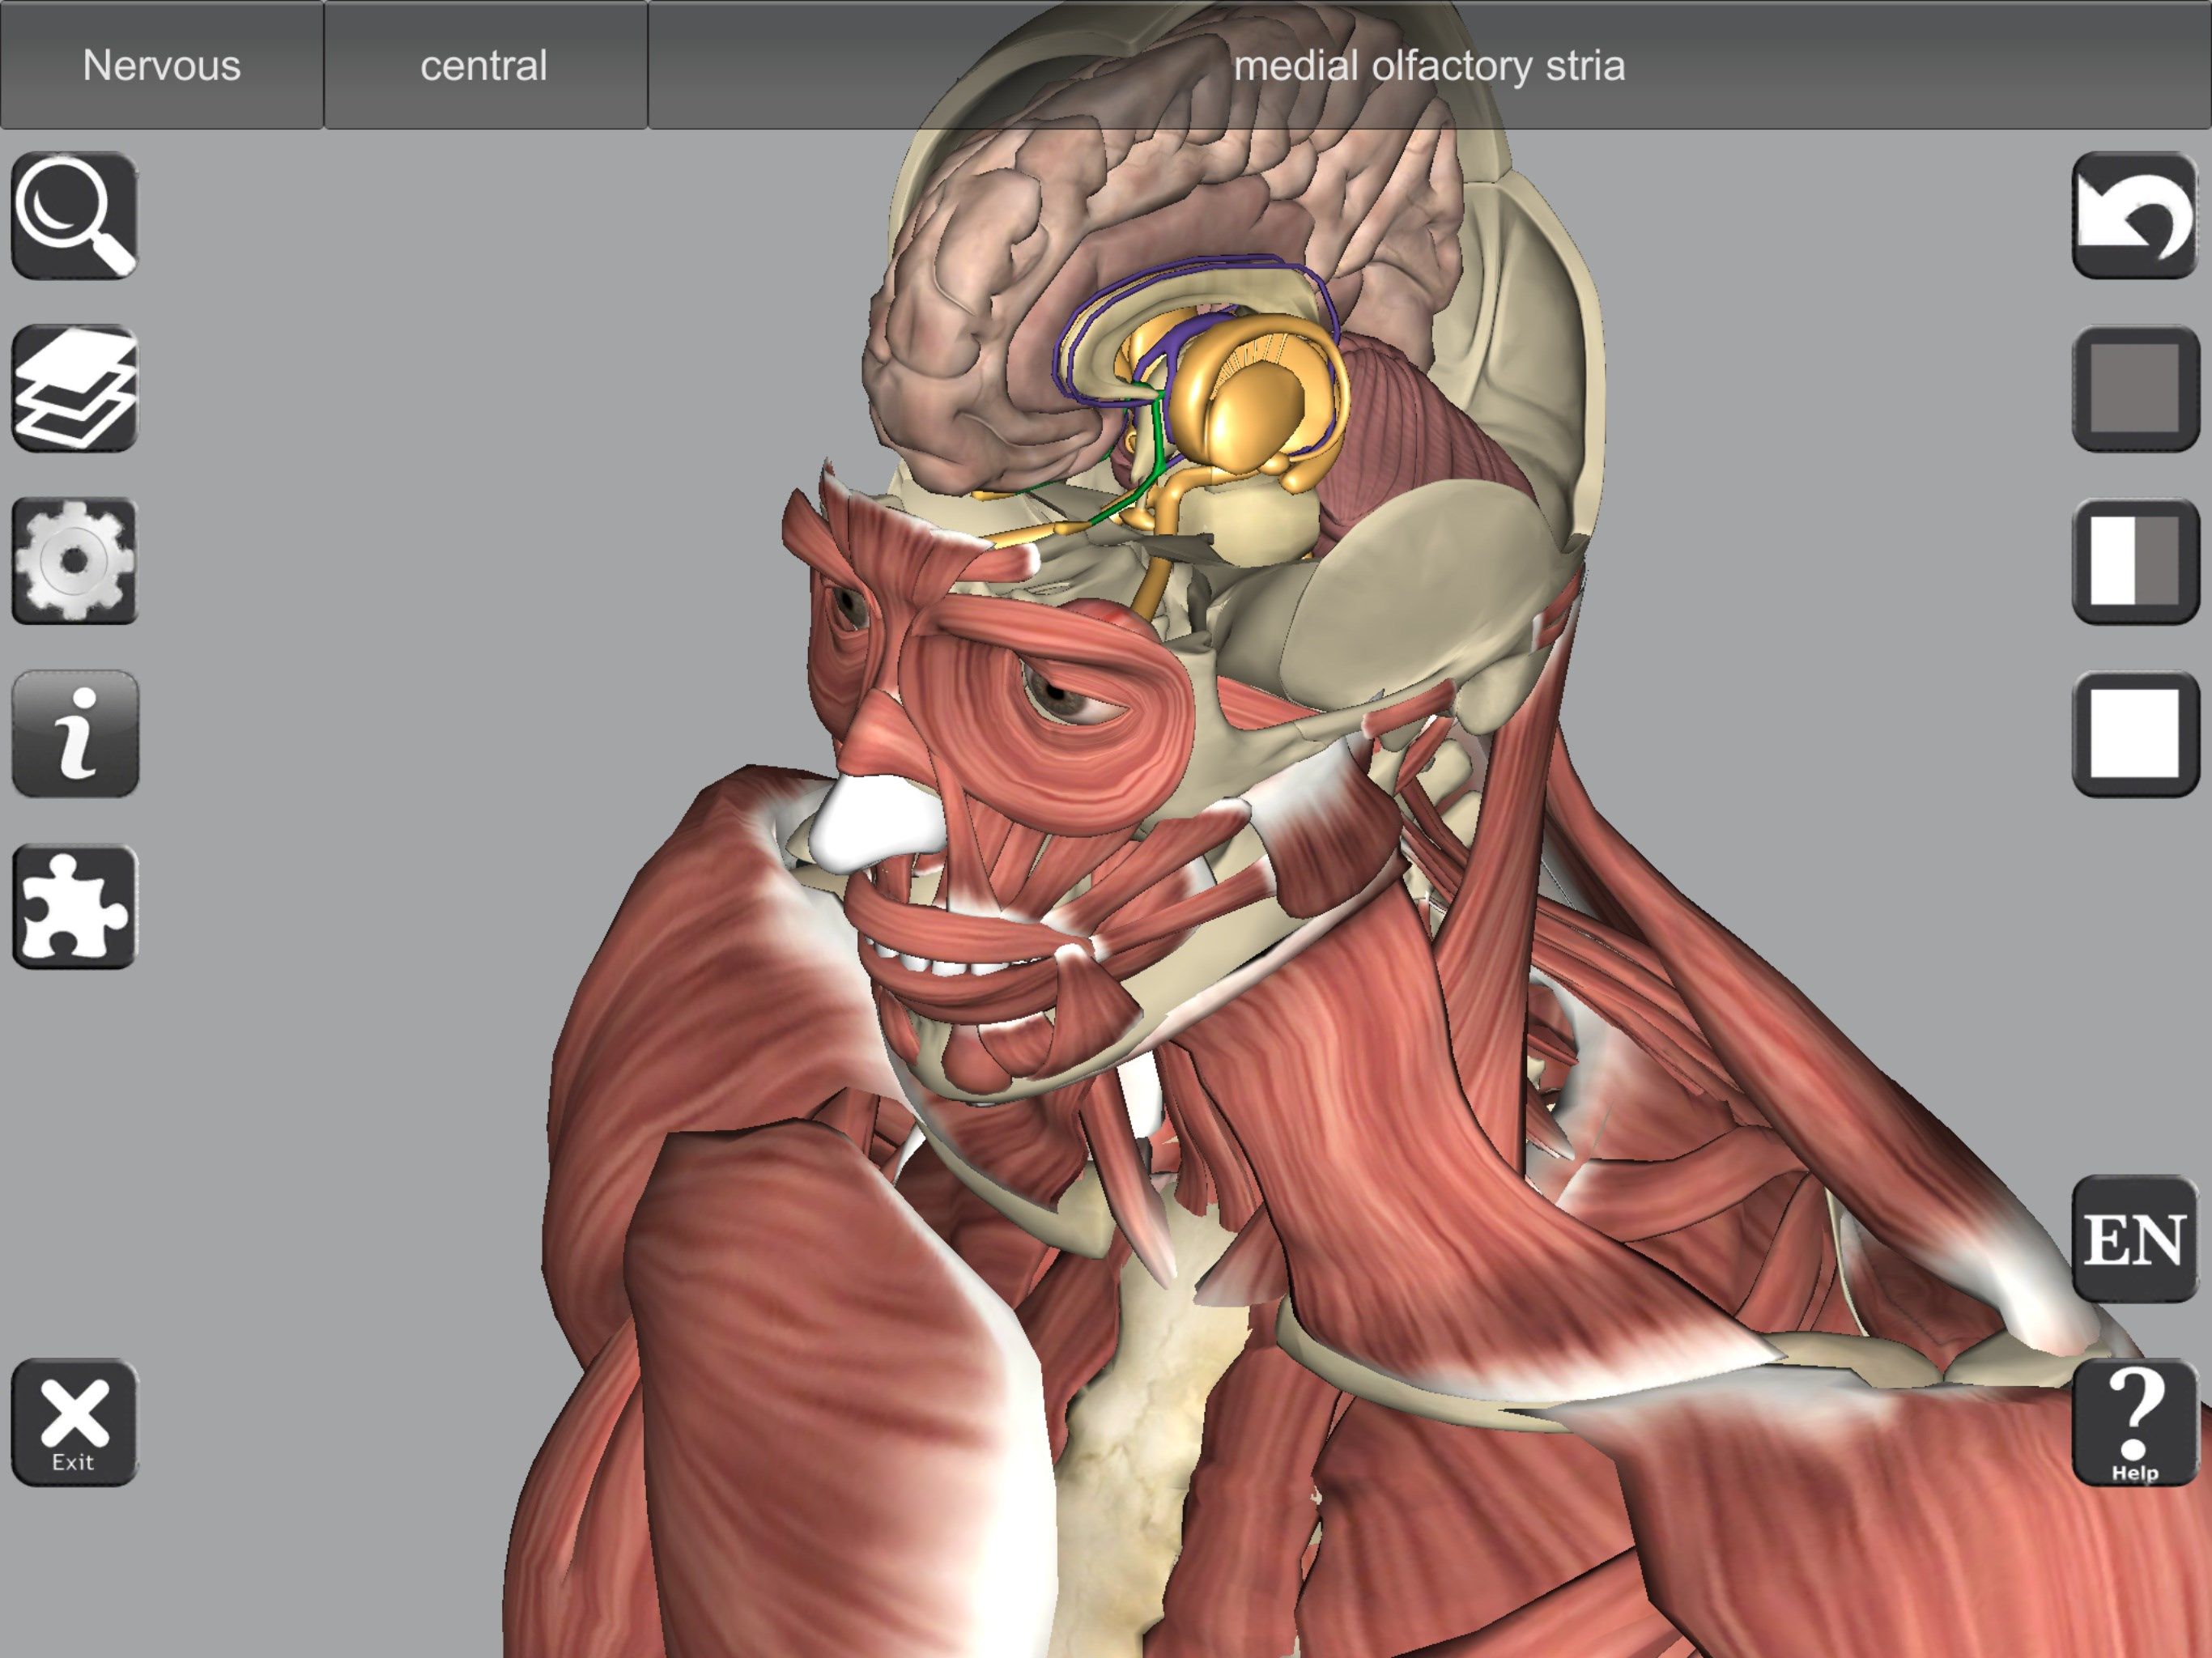 3D organs include a detailed brain model